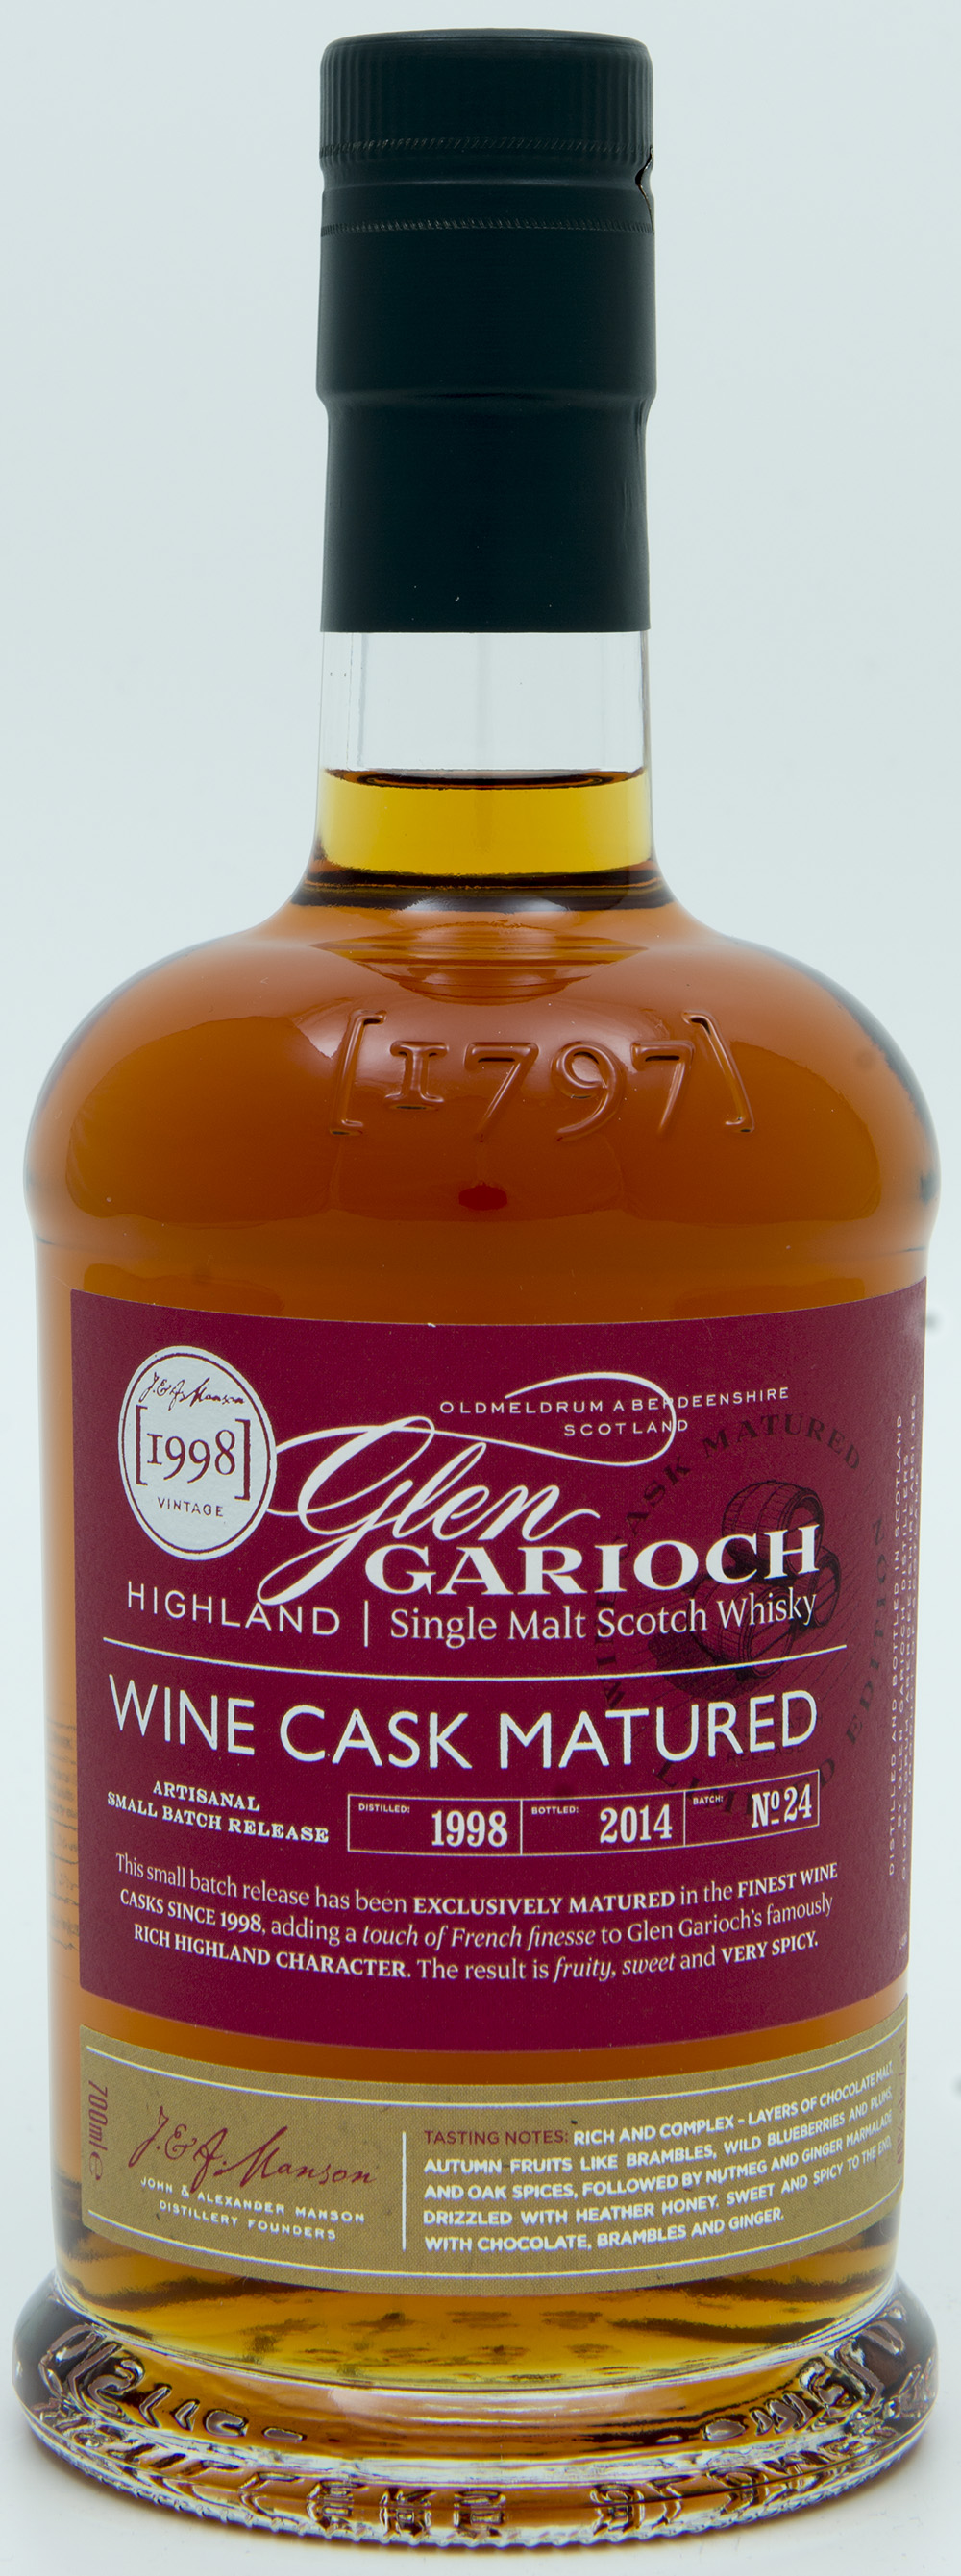 Billede: DSC_6567 Glen Garioch Batch 24 - Wine cask Matured 1998 - 2014 - bottle front.jpg